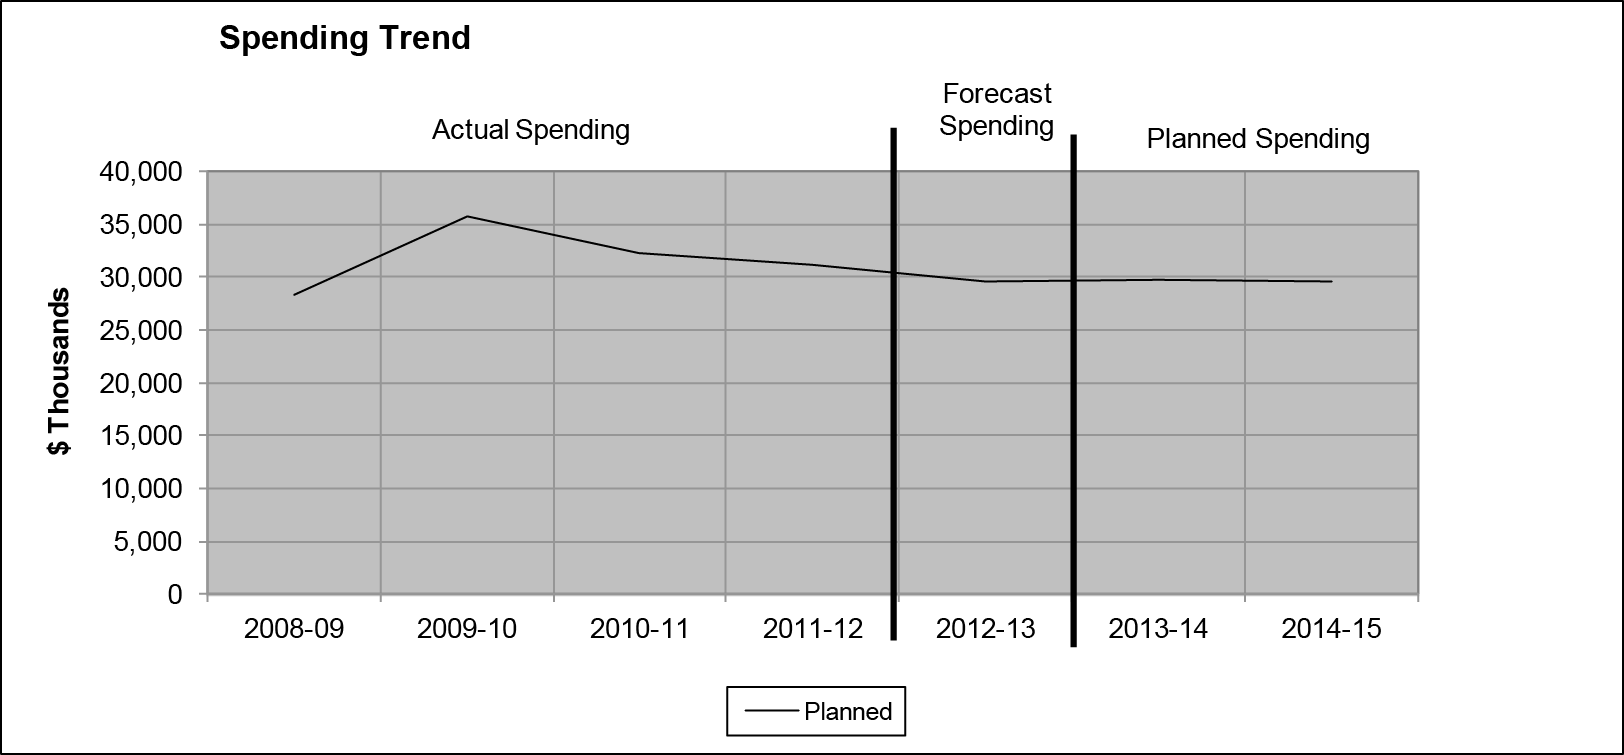 Expenditure Profile - Spending Trend